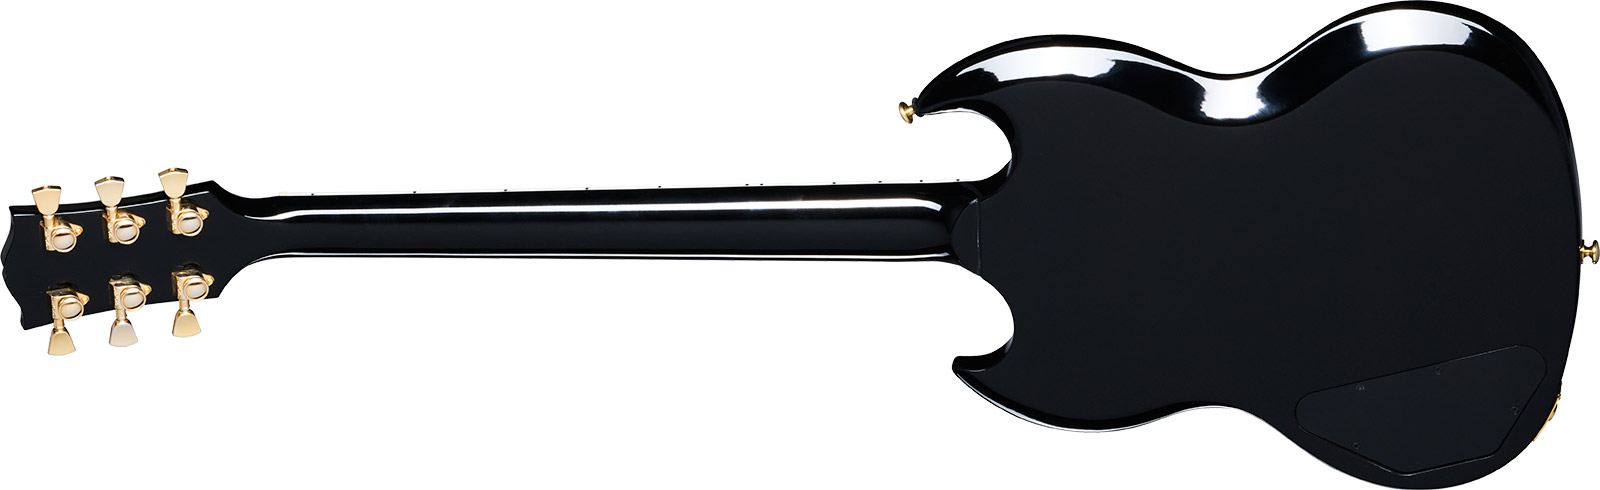 Gibson Sg Supreme Usa 2h Ht Rw - Fireburst - Guitarra eléctrica de doble corte - Variation 1